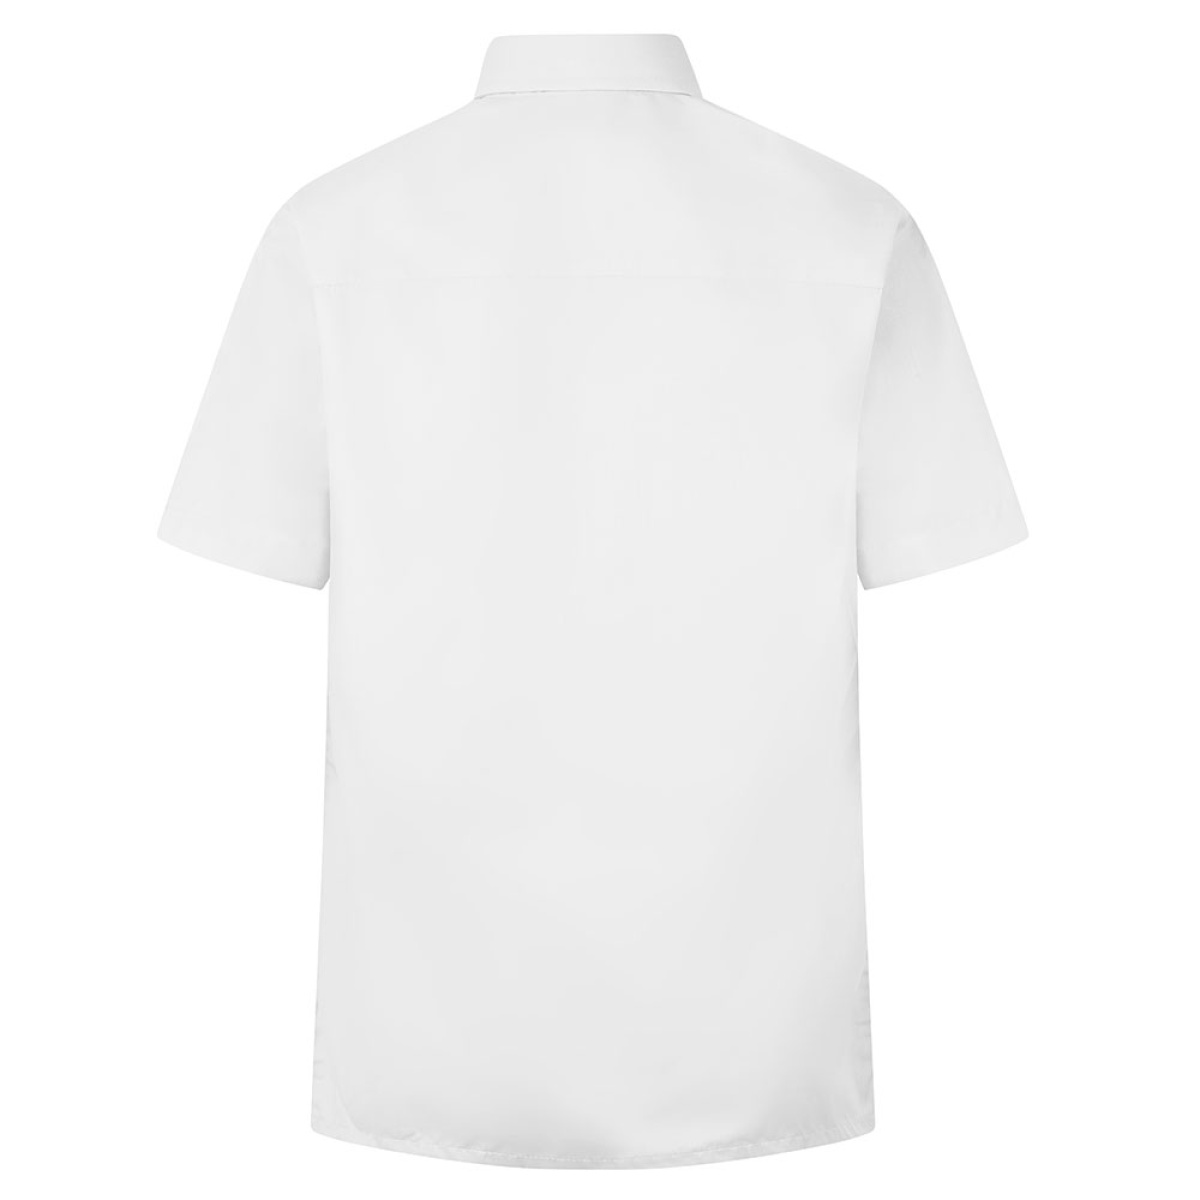 Shirt - White - Twin Pack - Short Sleeve - Zeco, Plain Schoolwear, Shirts & Blouses